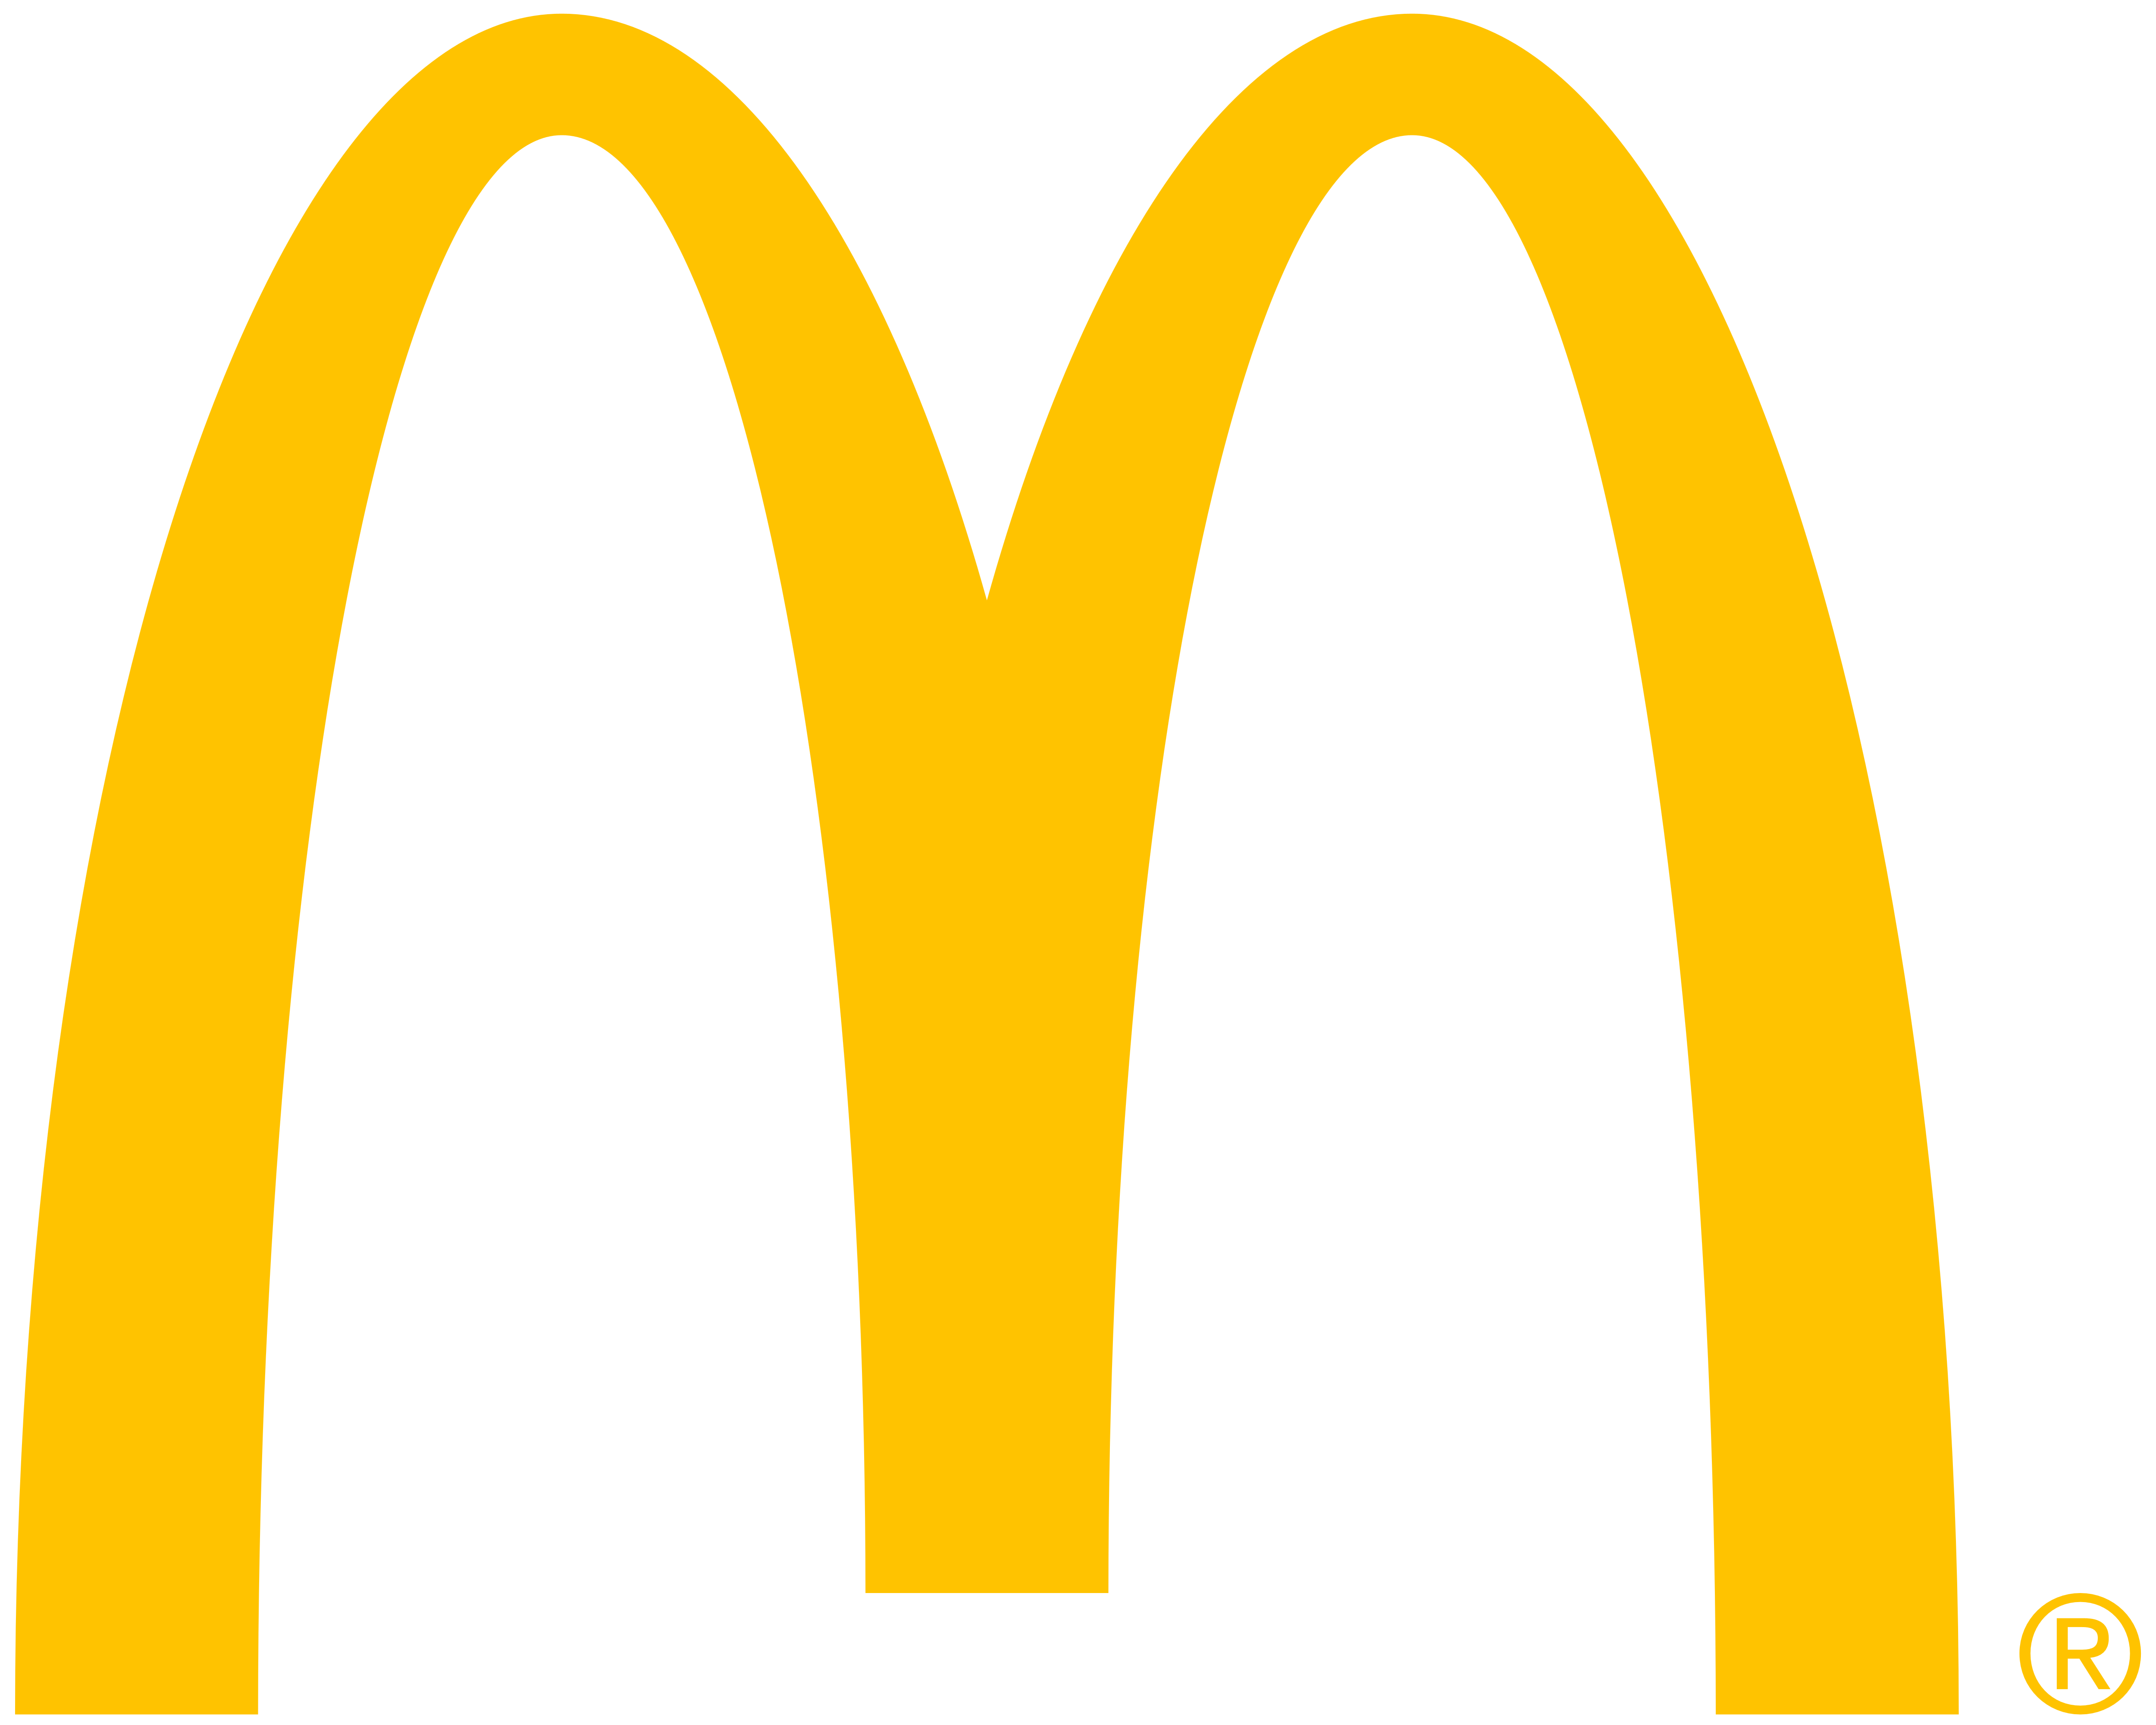 mcdonalds logo image png #2775